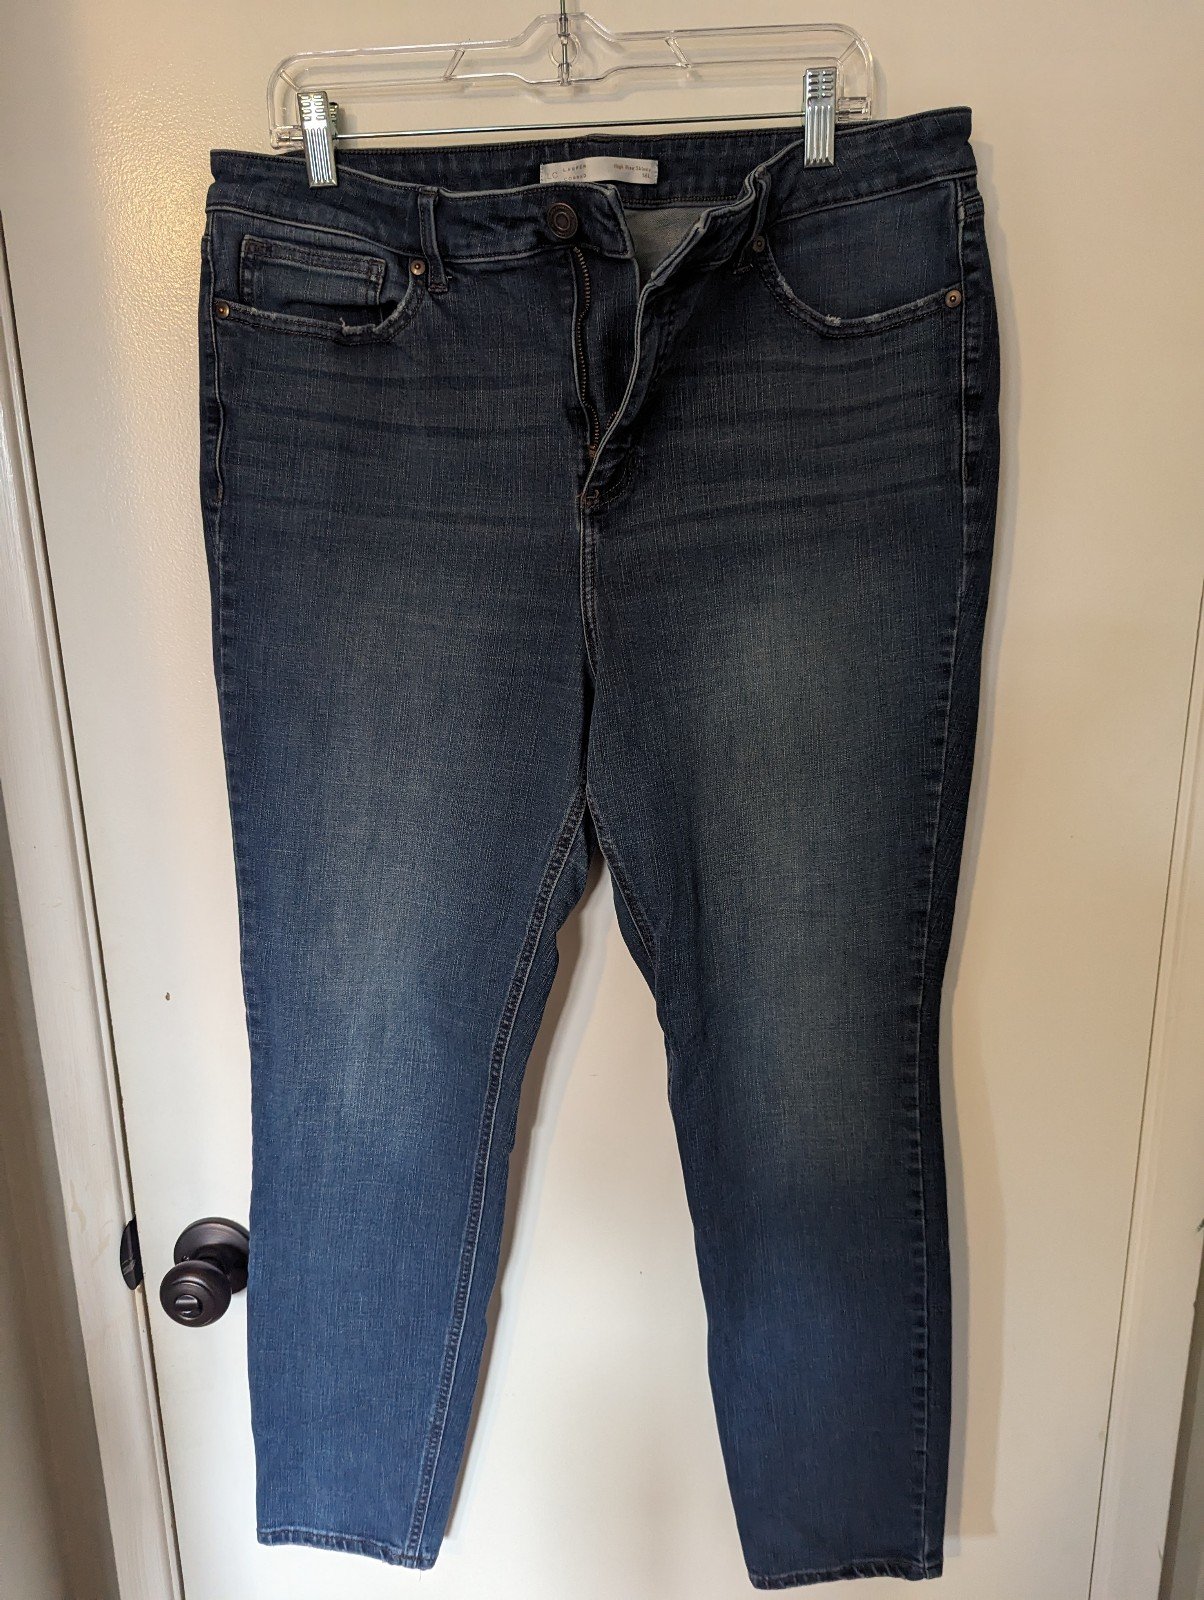 large discount Lauren Conrad skinny jeans 16 I0IGwTP1D 